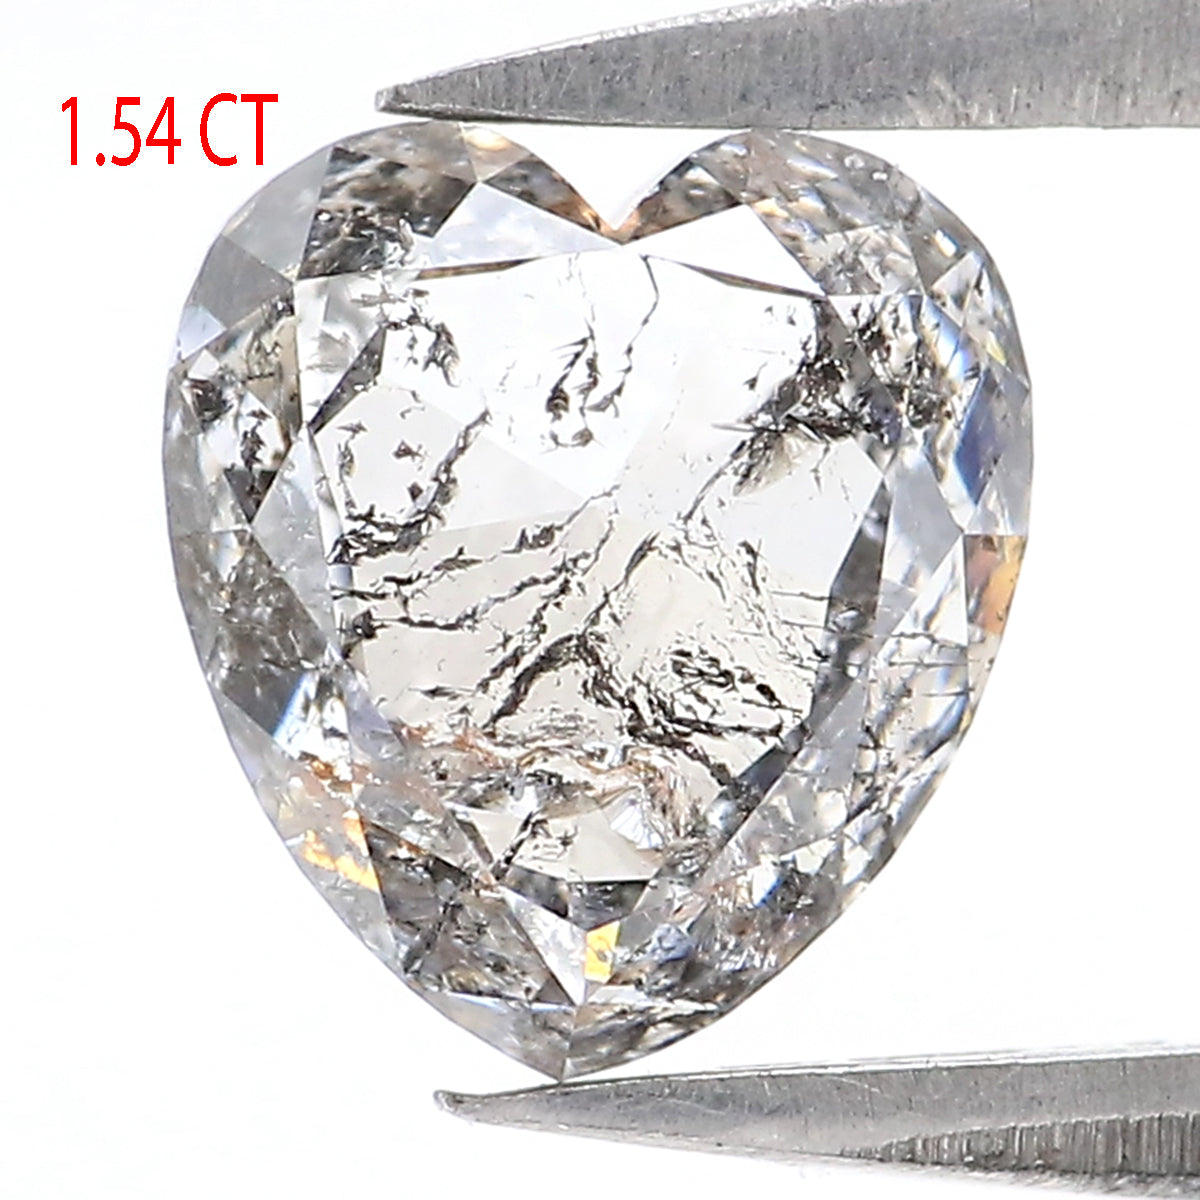 1.54 CT Natural Loose Heart Shape Diamond White - G Heart Cut Diamond 7.10 MM Natural Loose White - G Color Heart Rose Cut Diamond QL2598